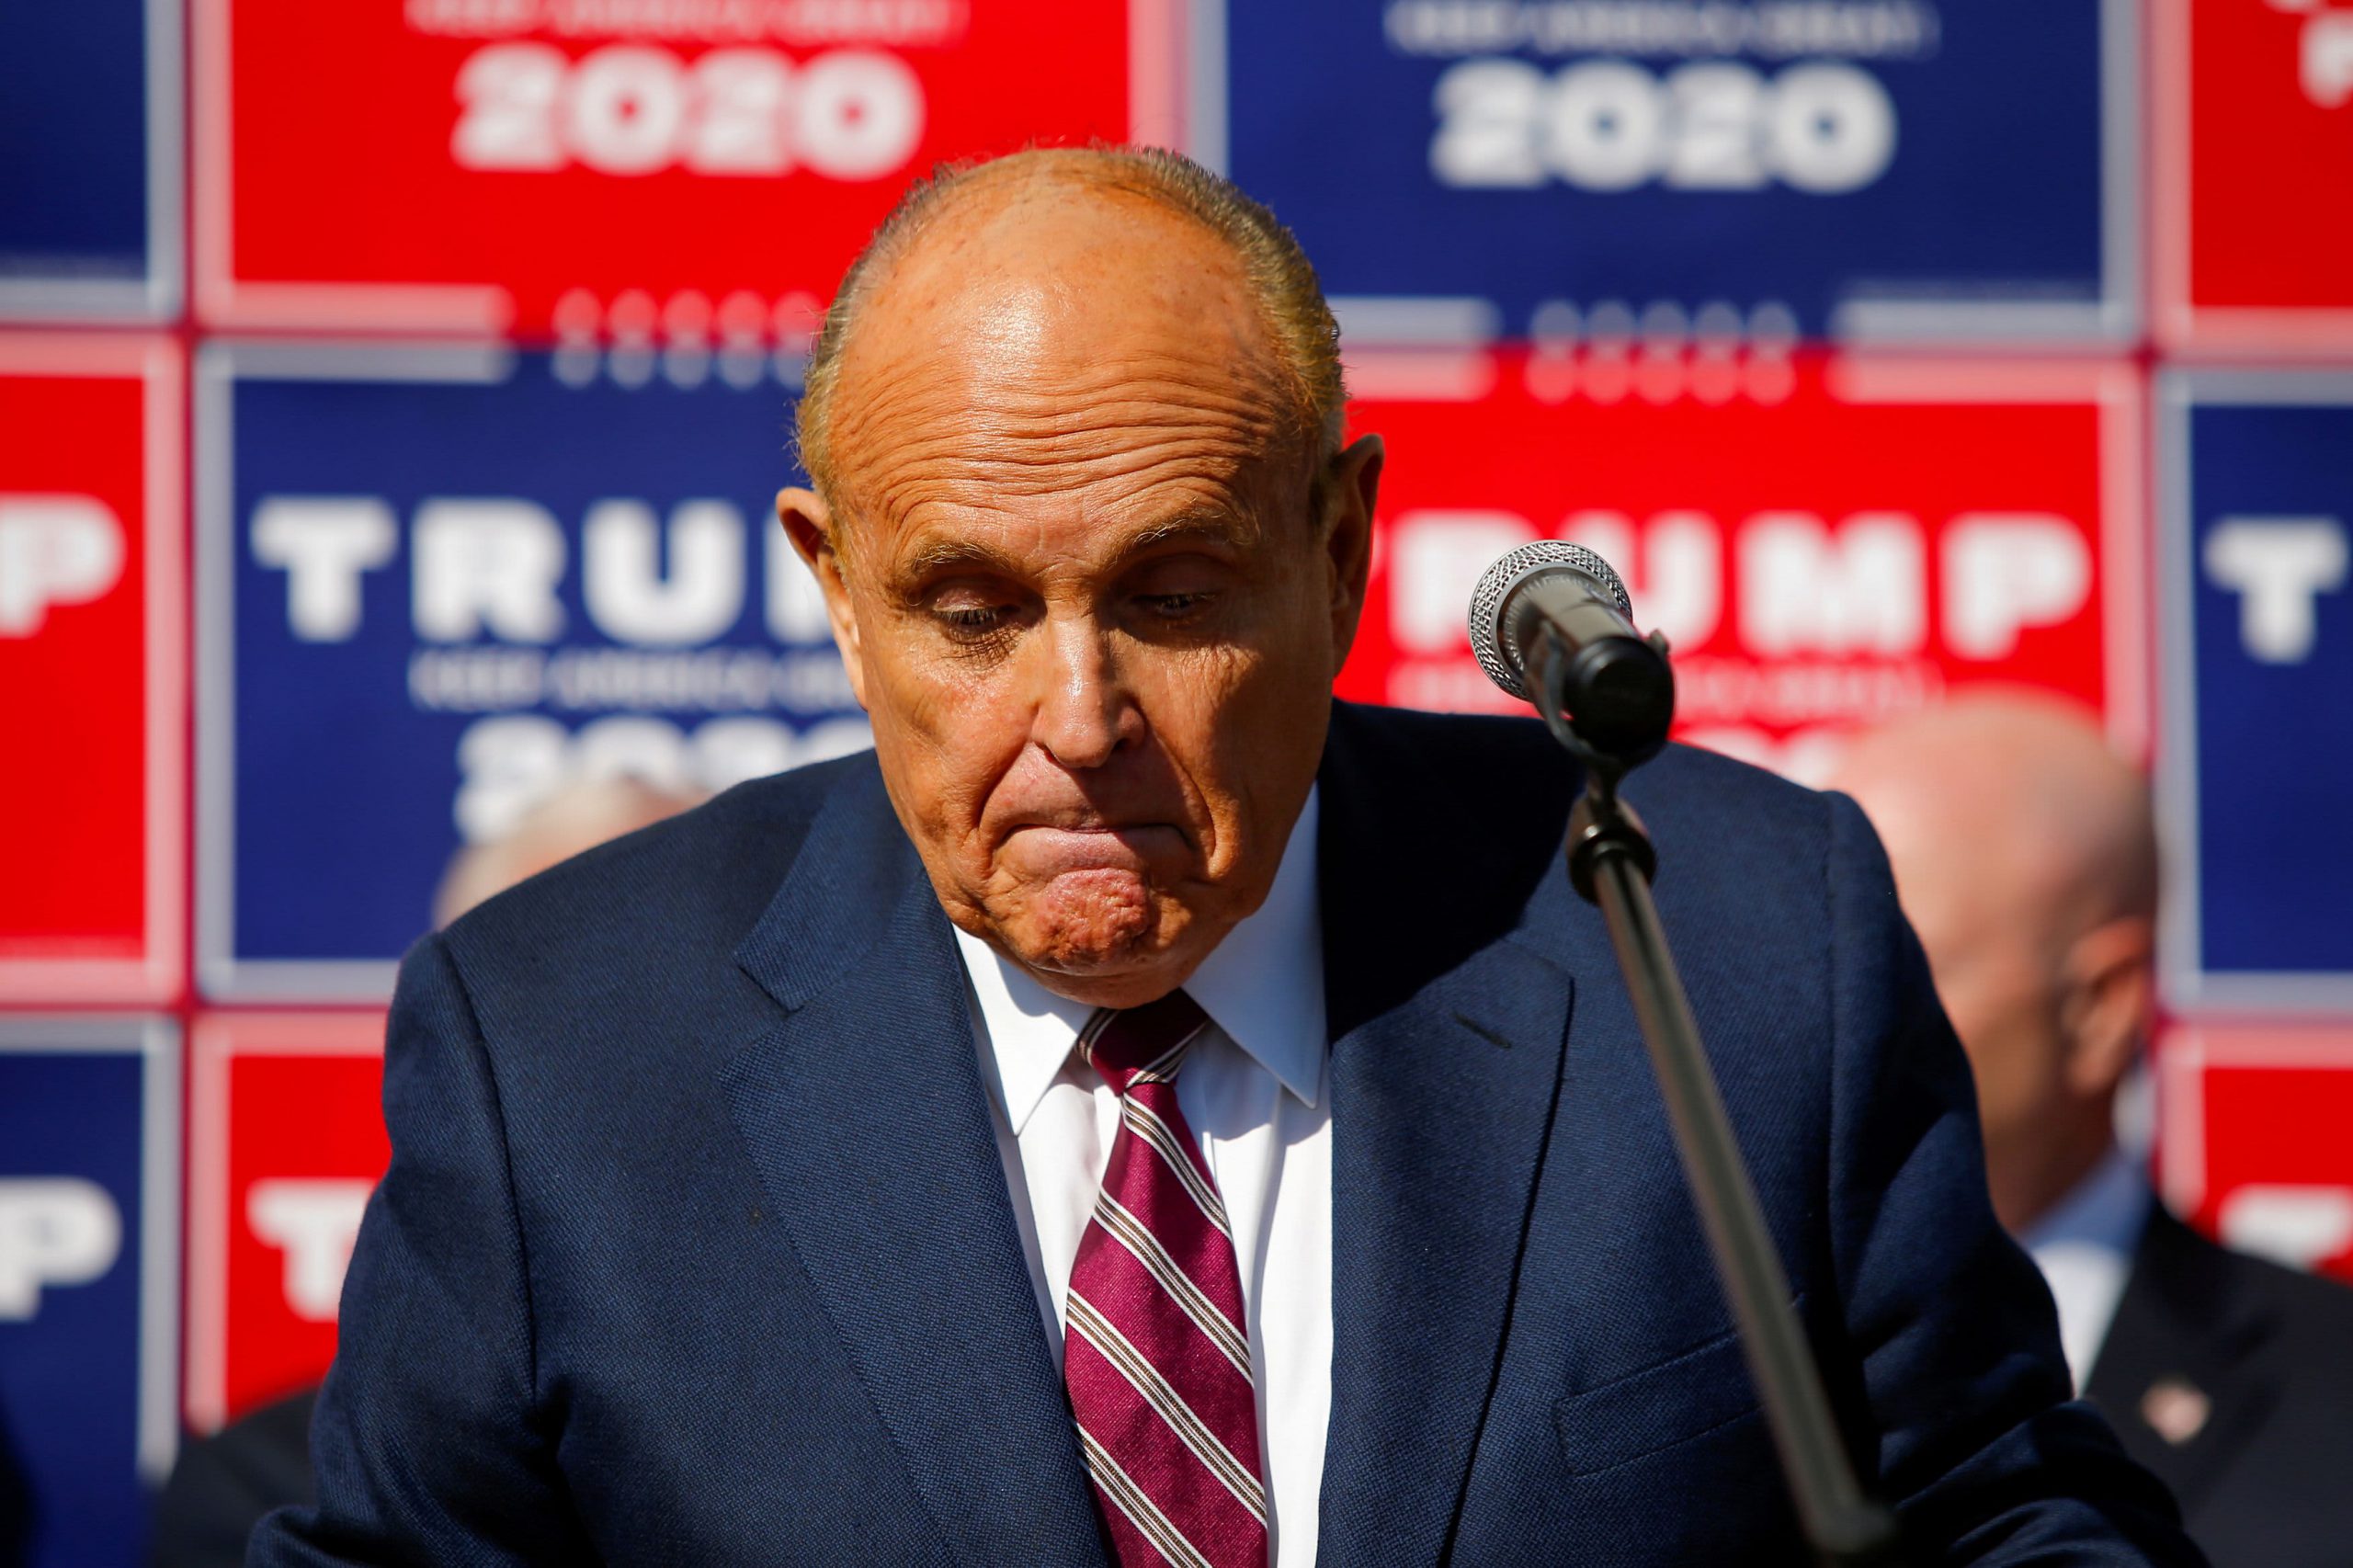 Rudy Giuliani, other Trump allies subpoenaed